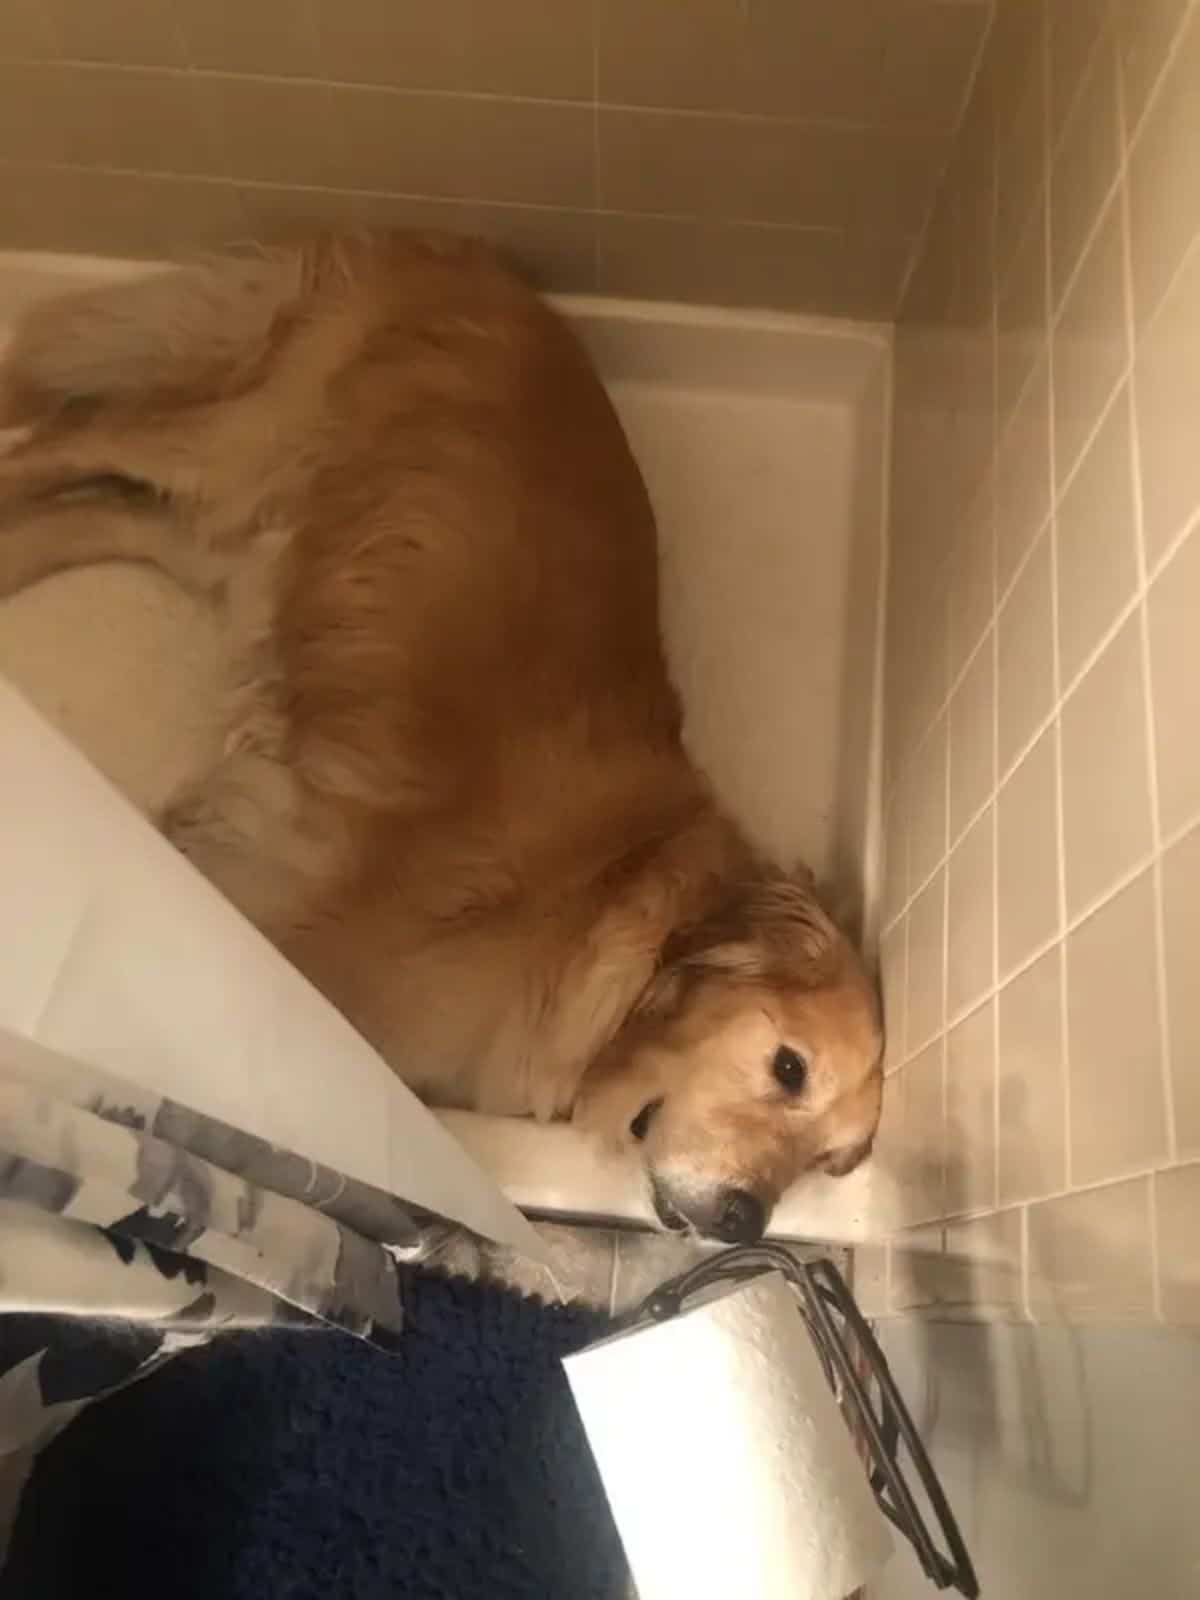 golden retriever sleeping in a shower cubicle